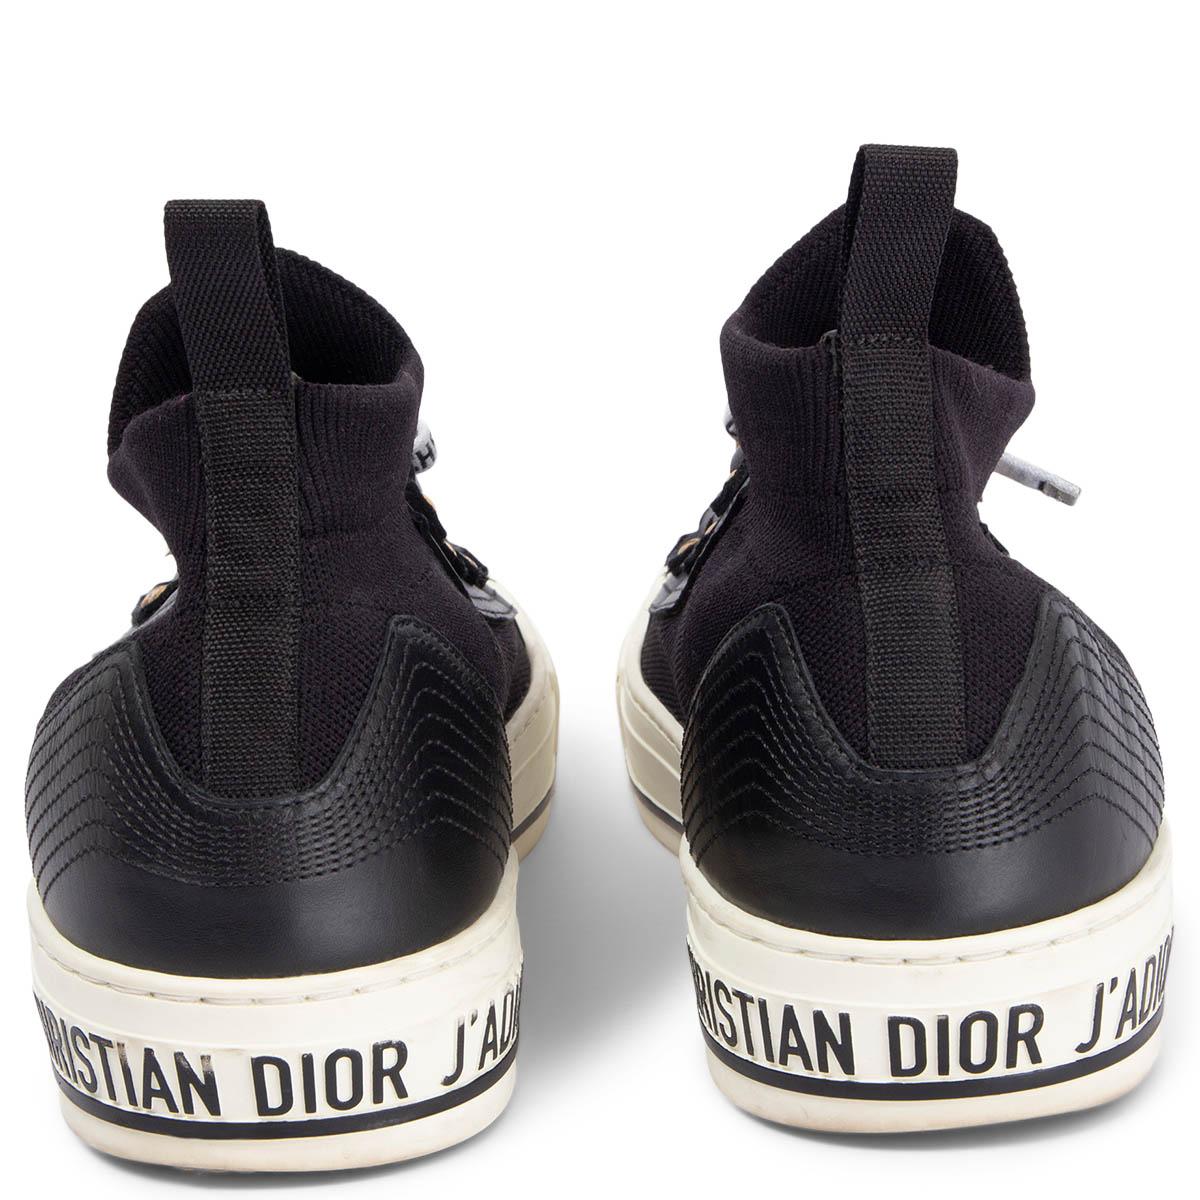 CHRISTIAN DIOR Chaussures chaussettes noires « WALK'N'DIOR » 40 1